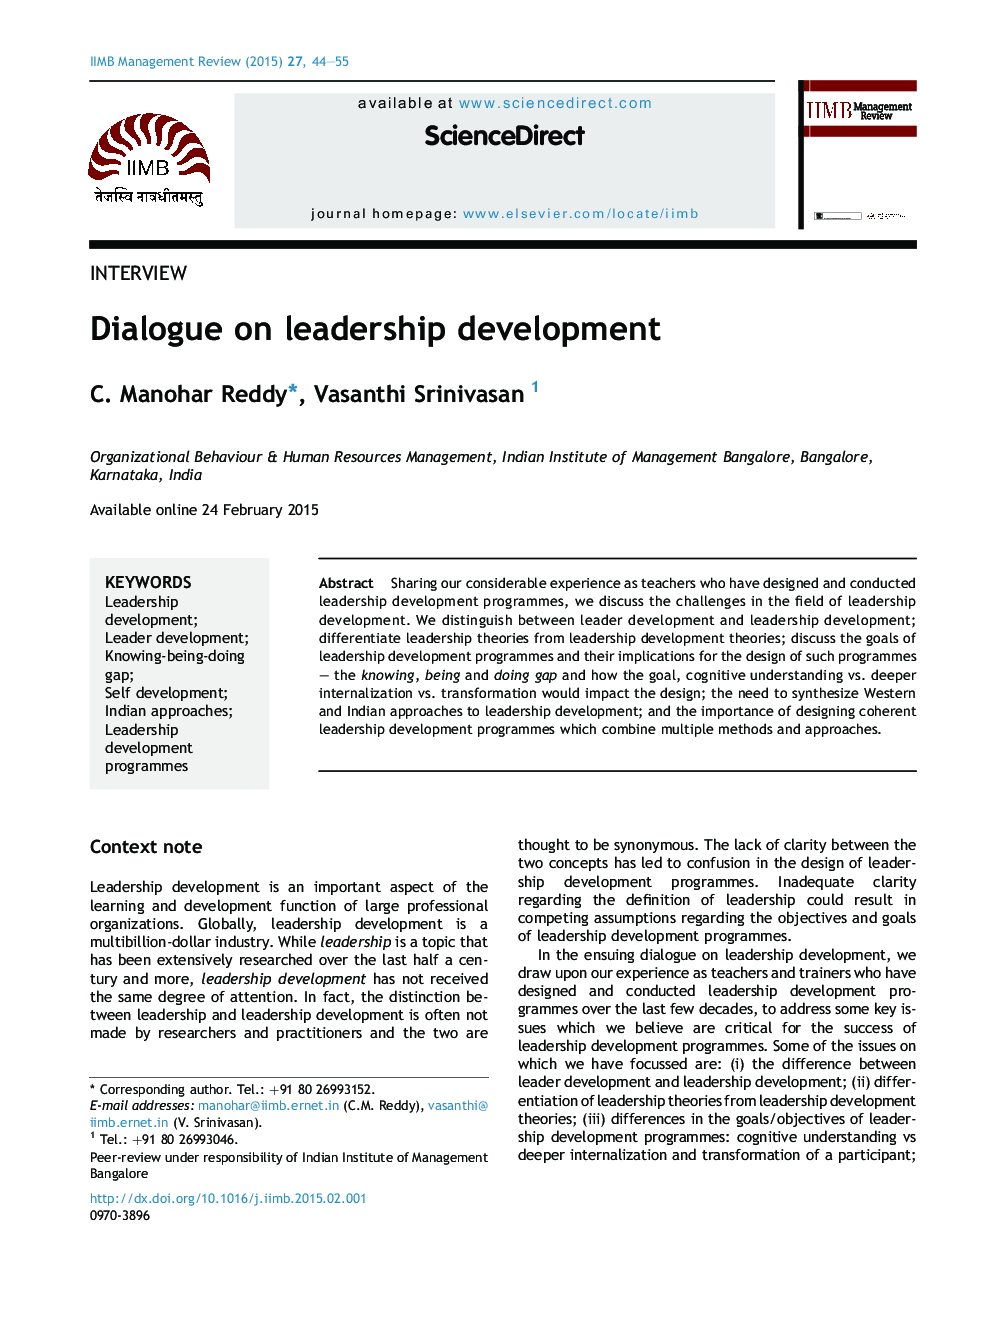 Dialogue on leadership development 